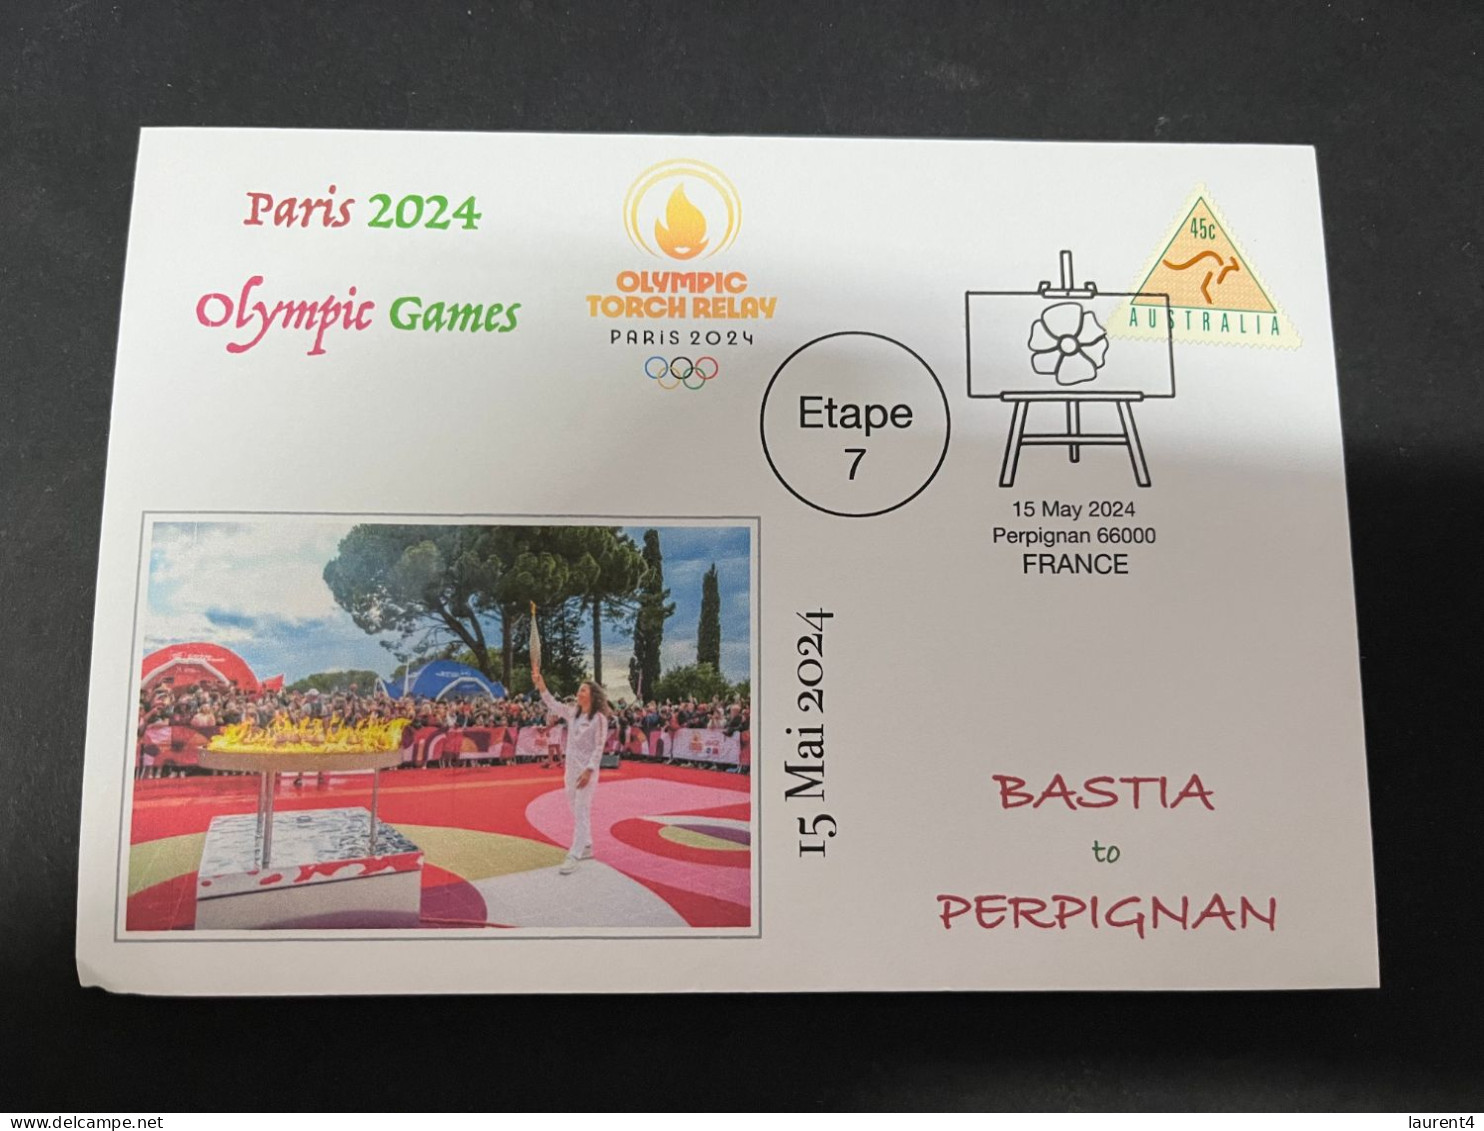 16-5-2024 (5 Z 17) Paris Olympic Games 2024 - Torch Relay (Etape 7) In Perpignan (15-5-2024) With Triangle Stamp - Eté 2024 : Paris